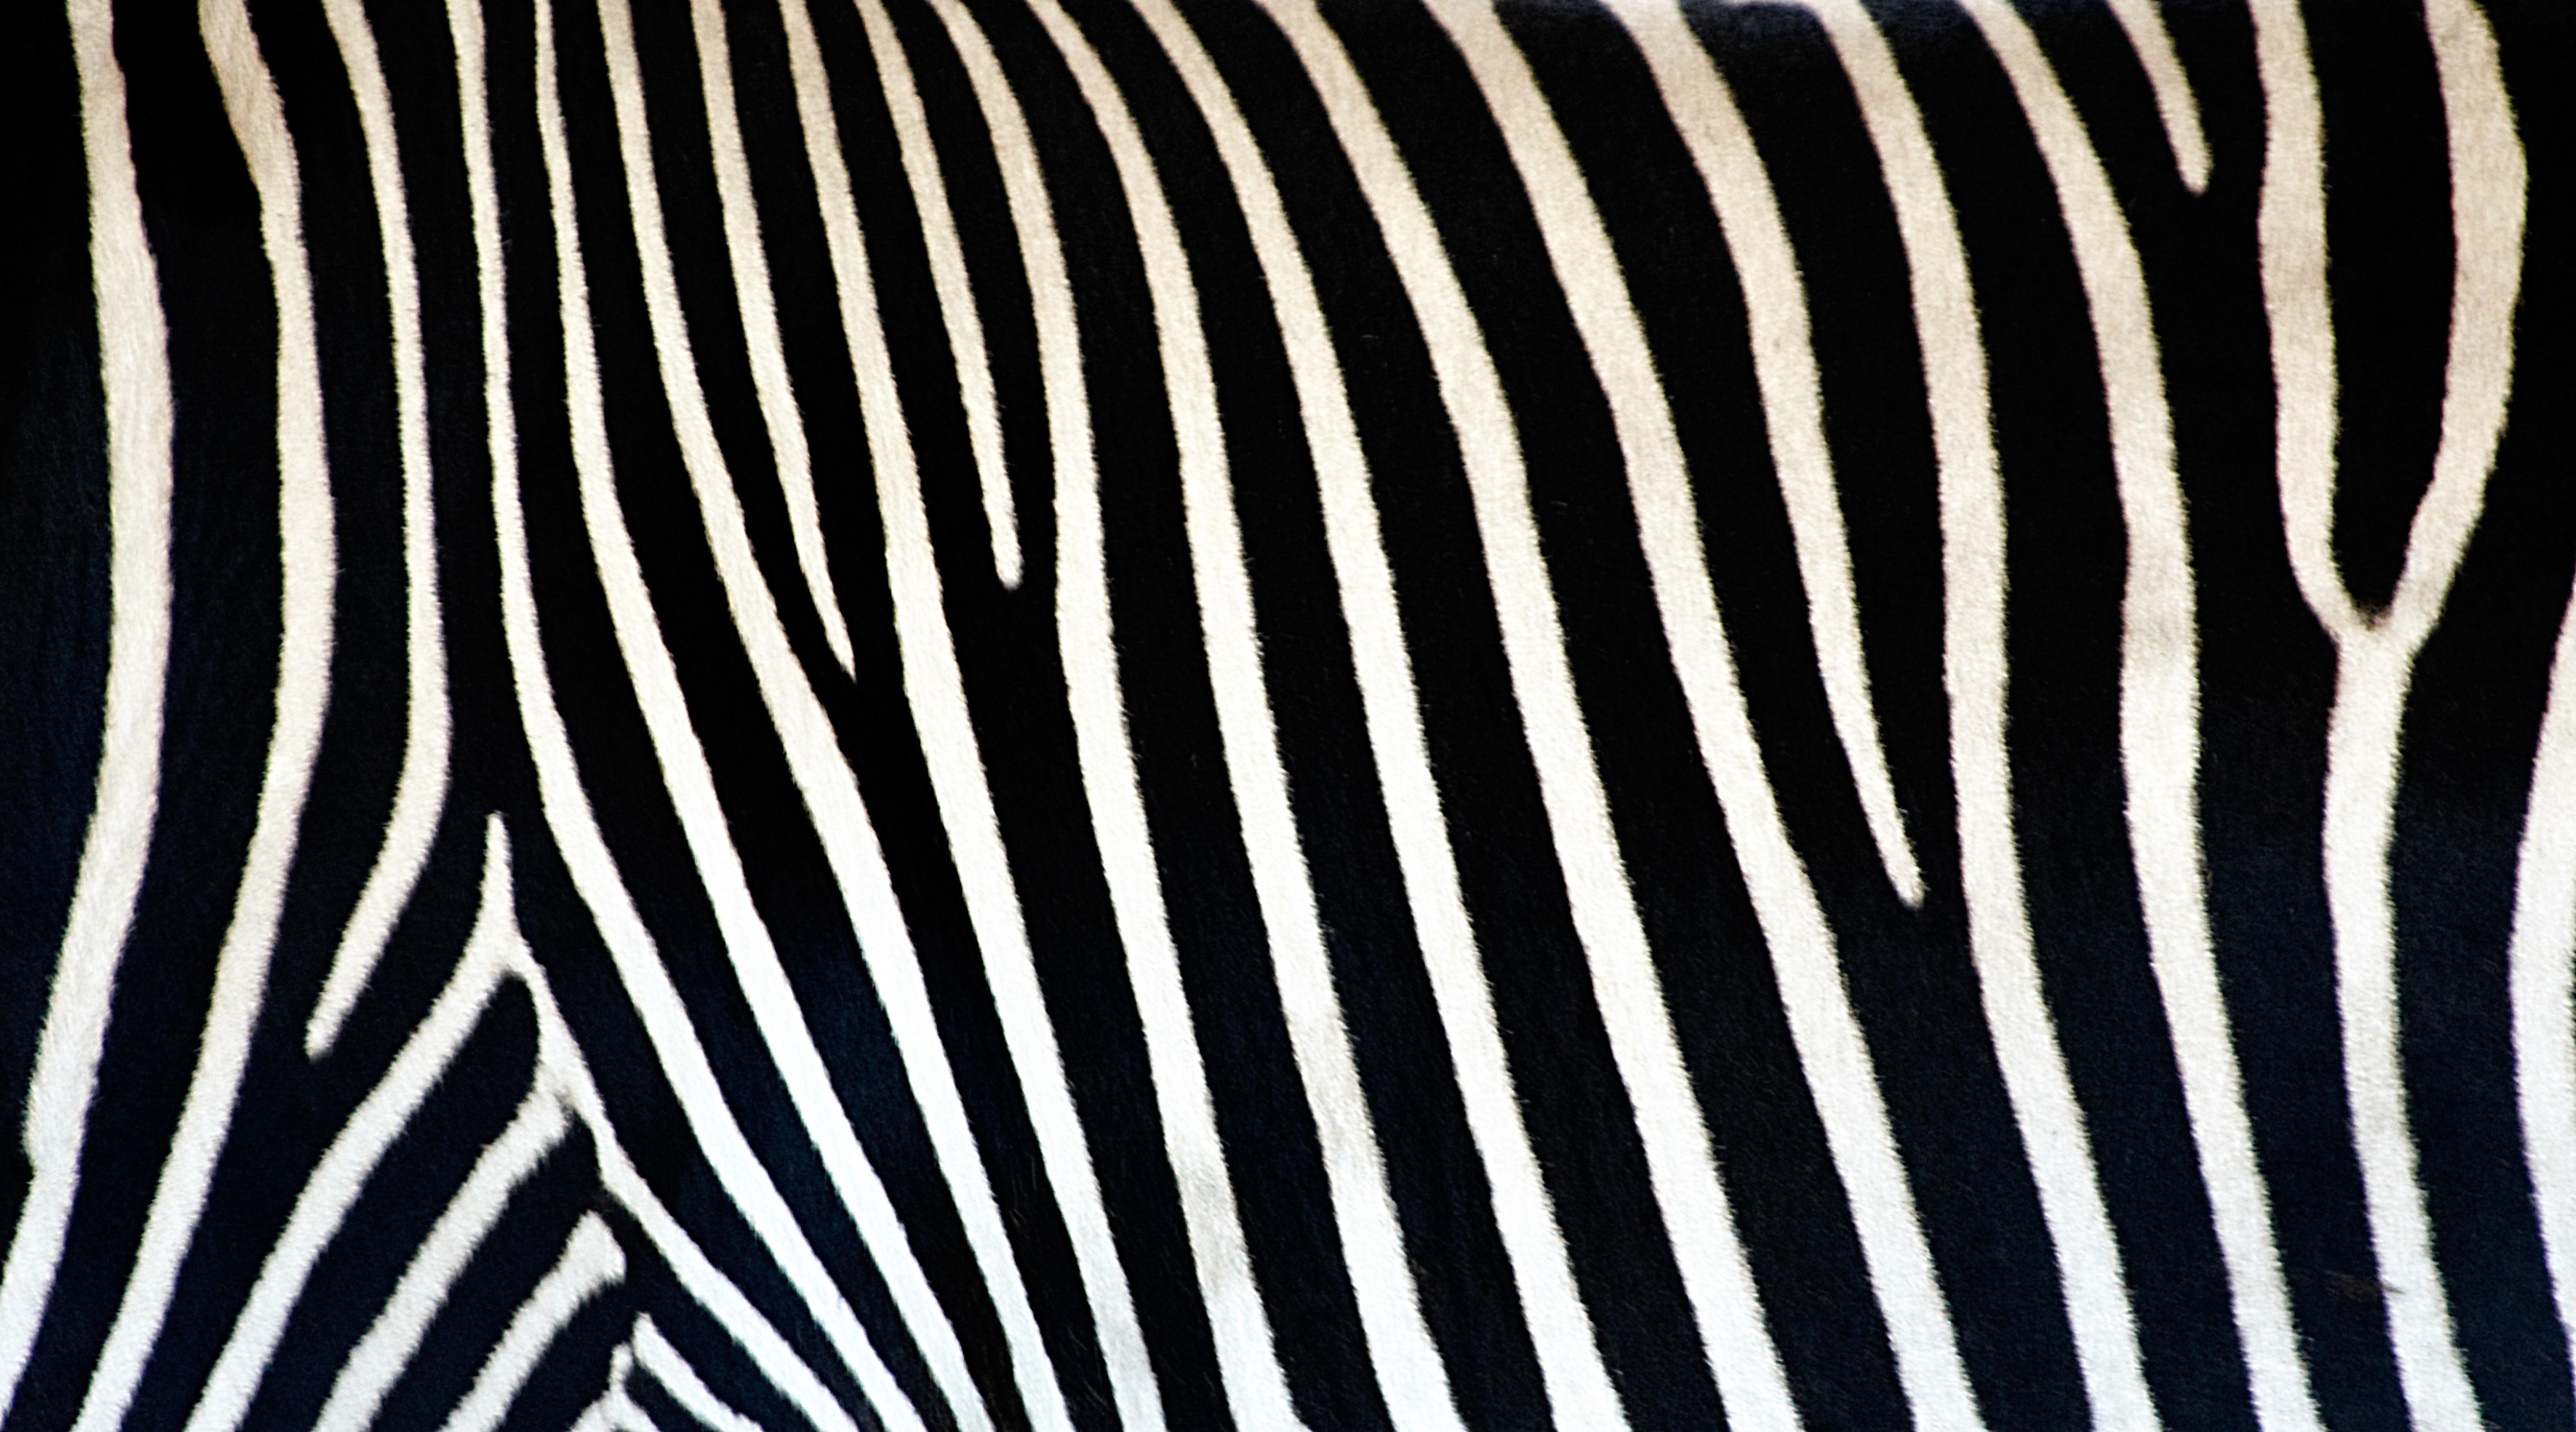 Animal Print Zebra Jpg